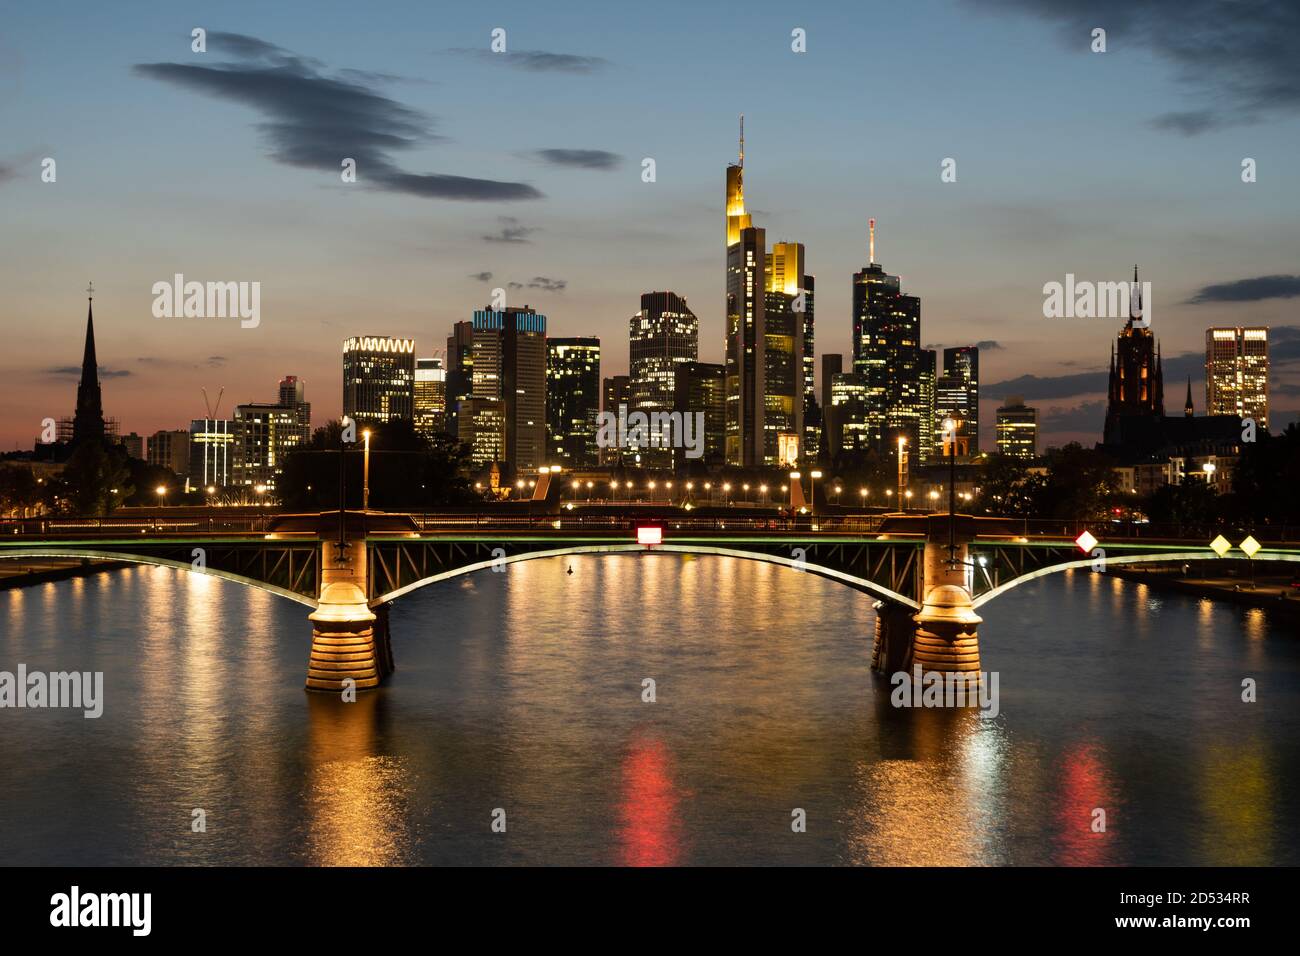 The Ignatz-Bubis bridge in Frankfurt am Main at night Stock Photo